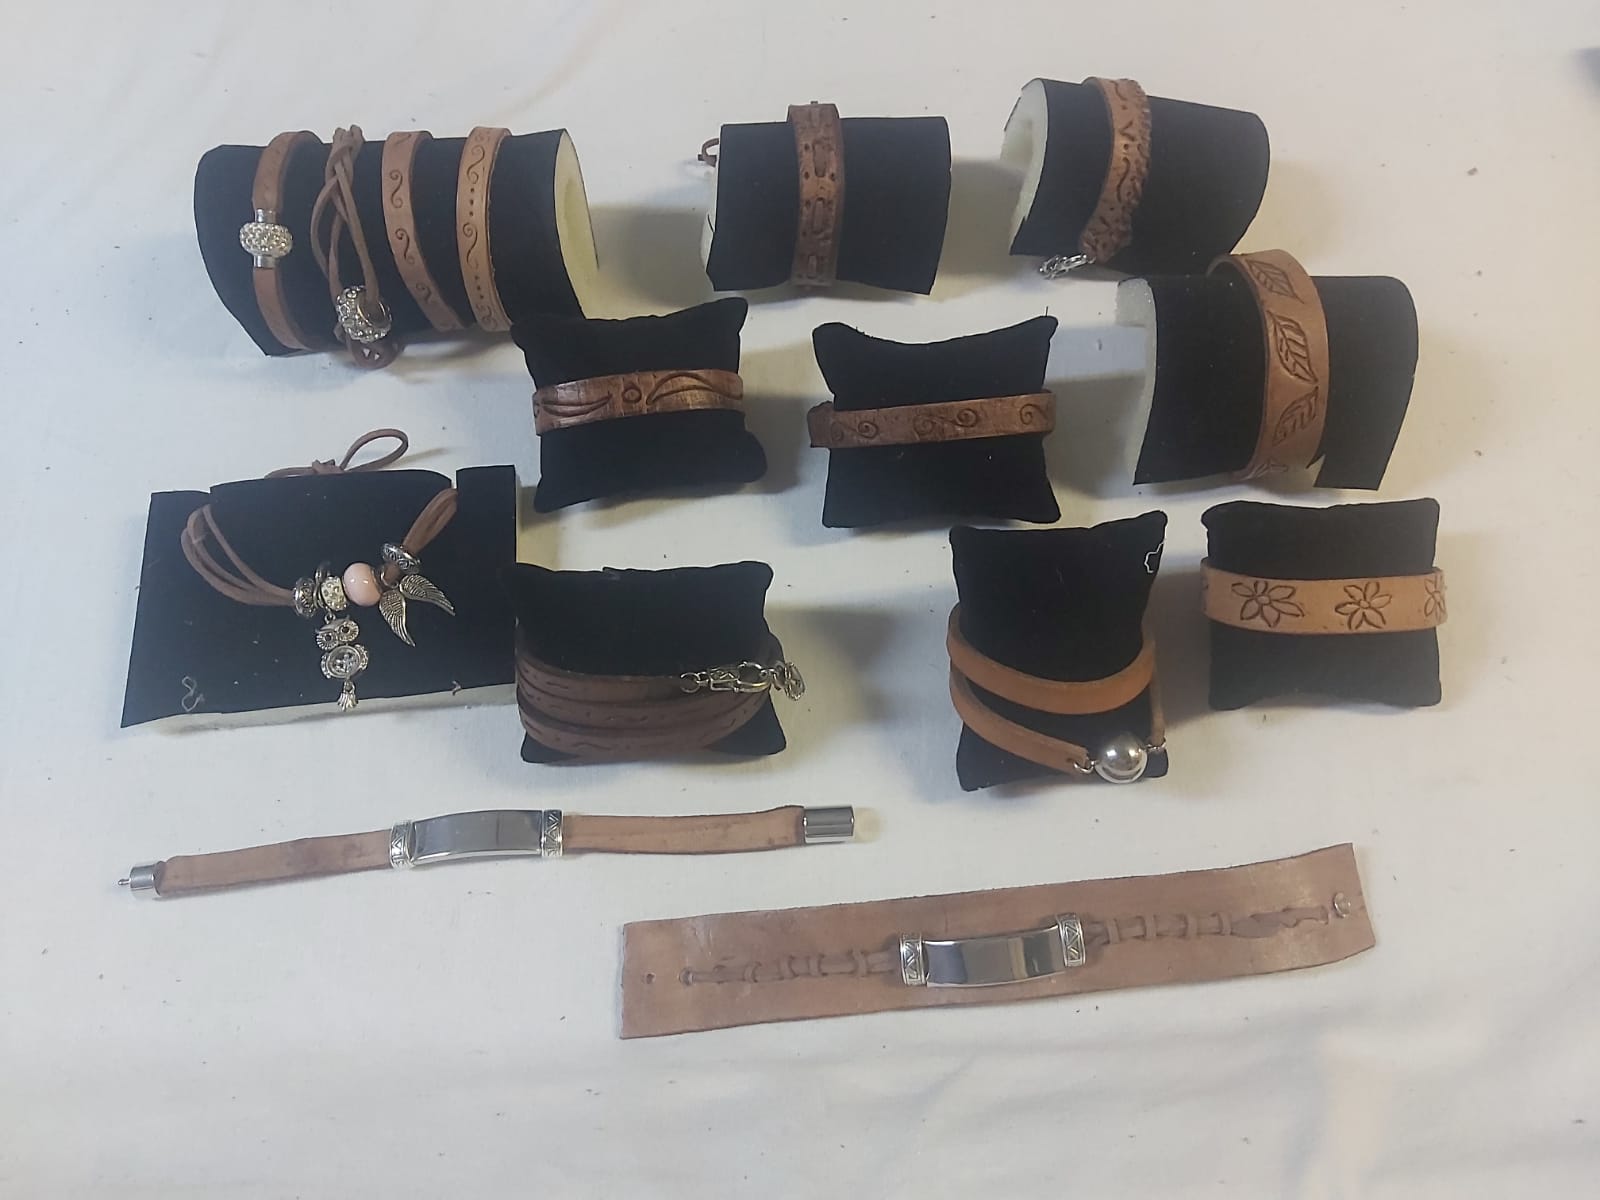 Bracelets and cuffs